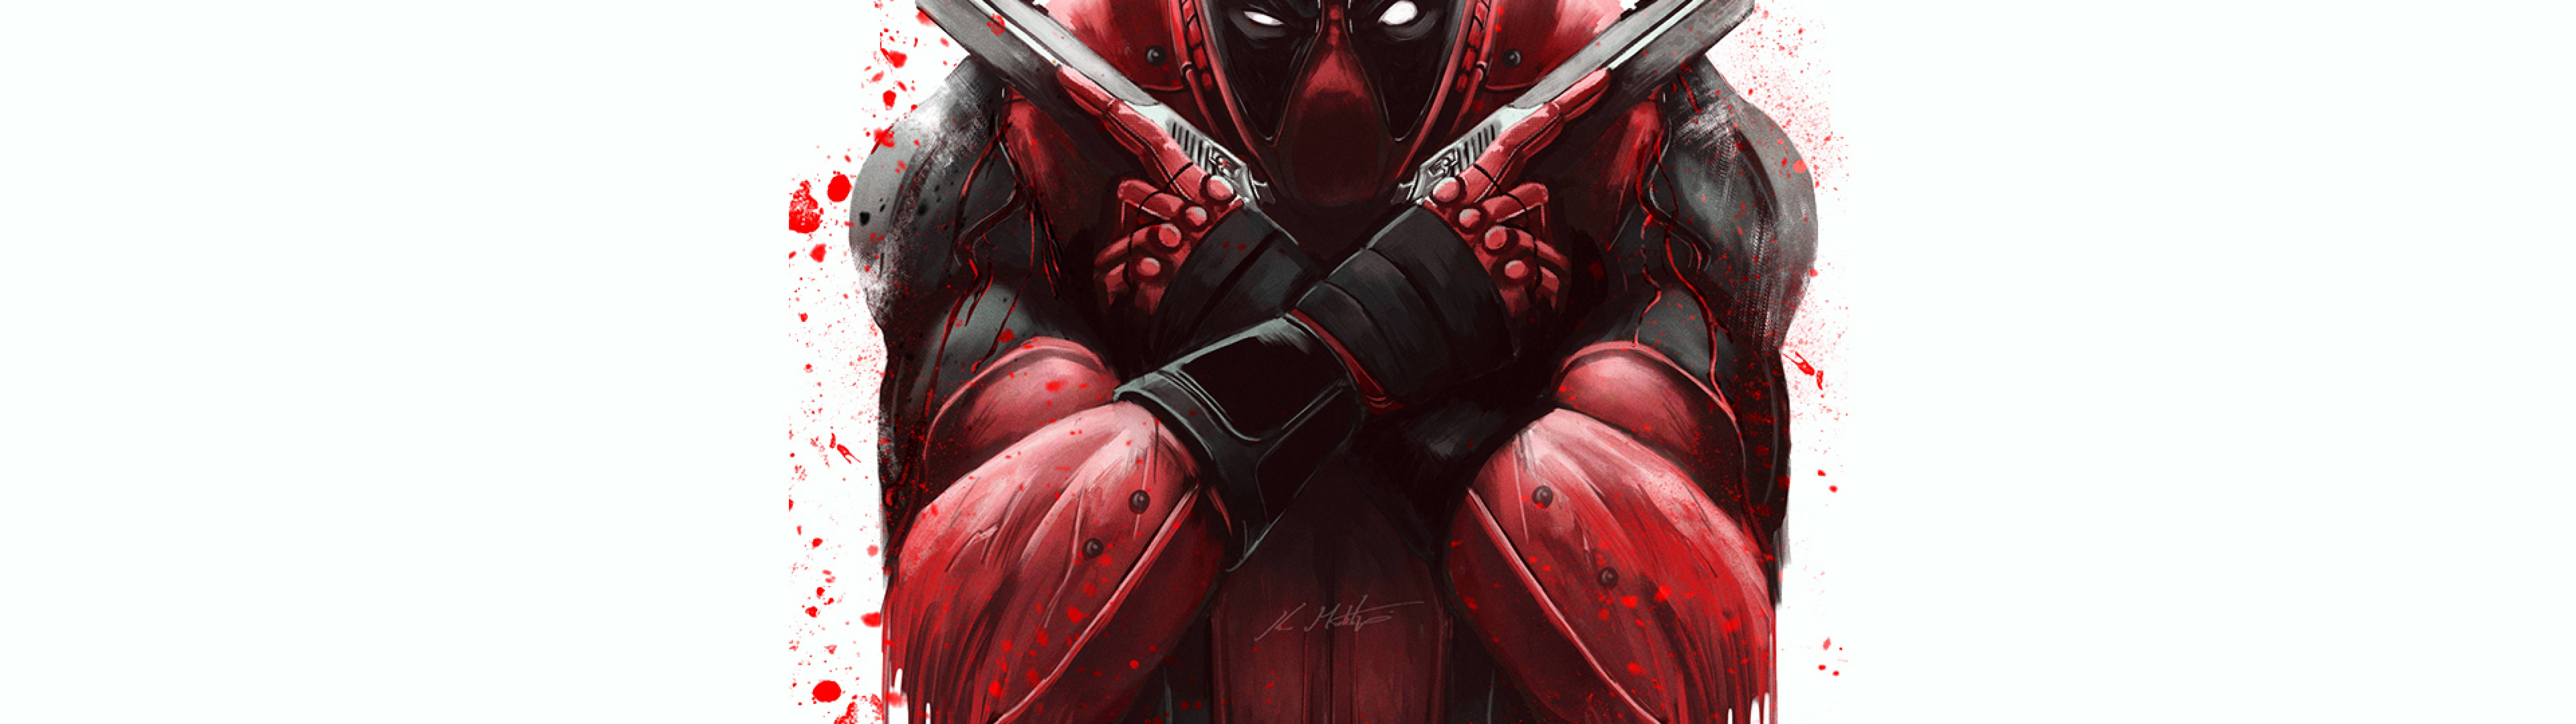 Marvel's Deadpool In 5120 X 1440 Background